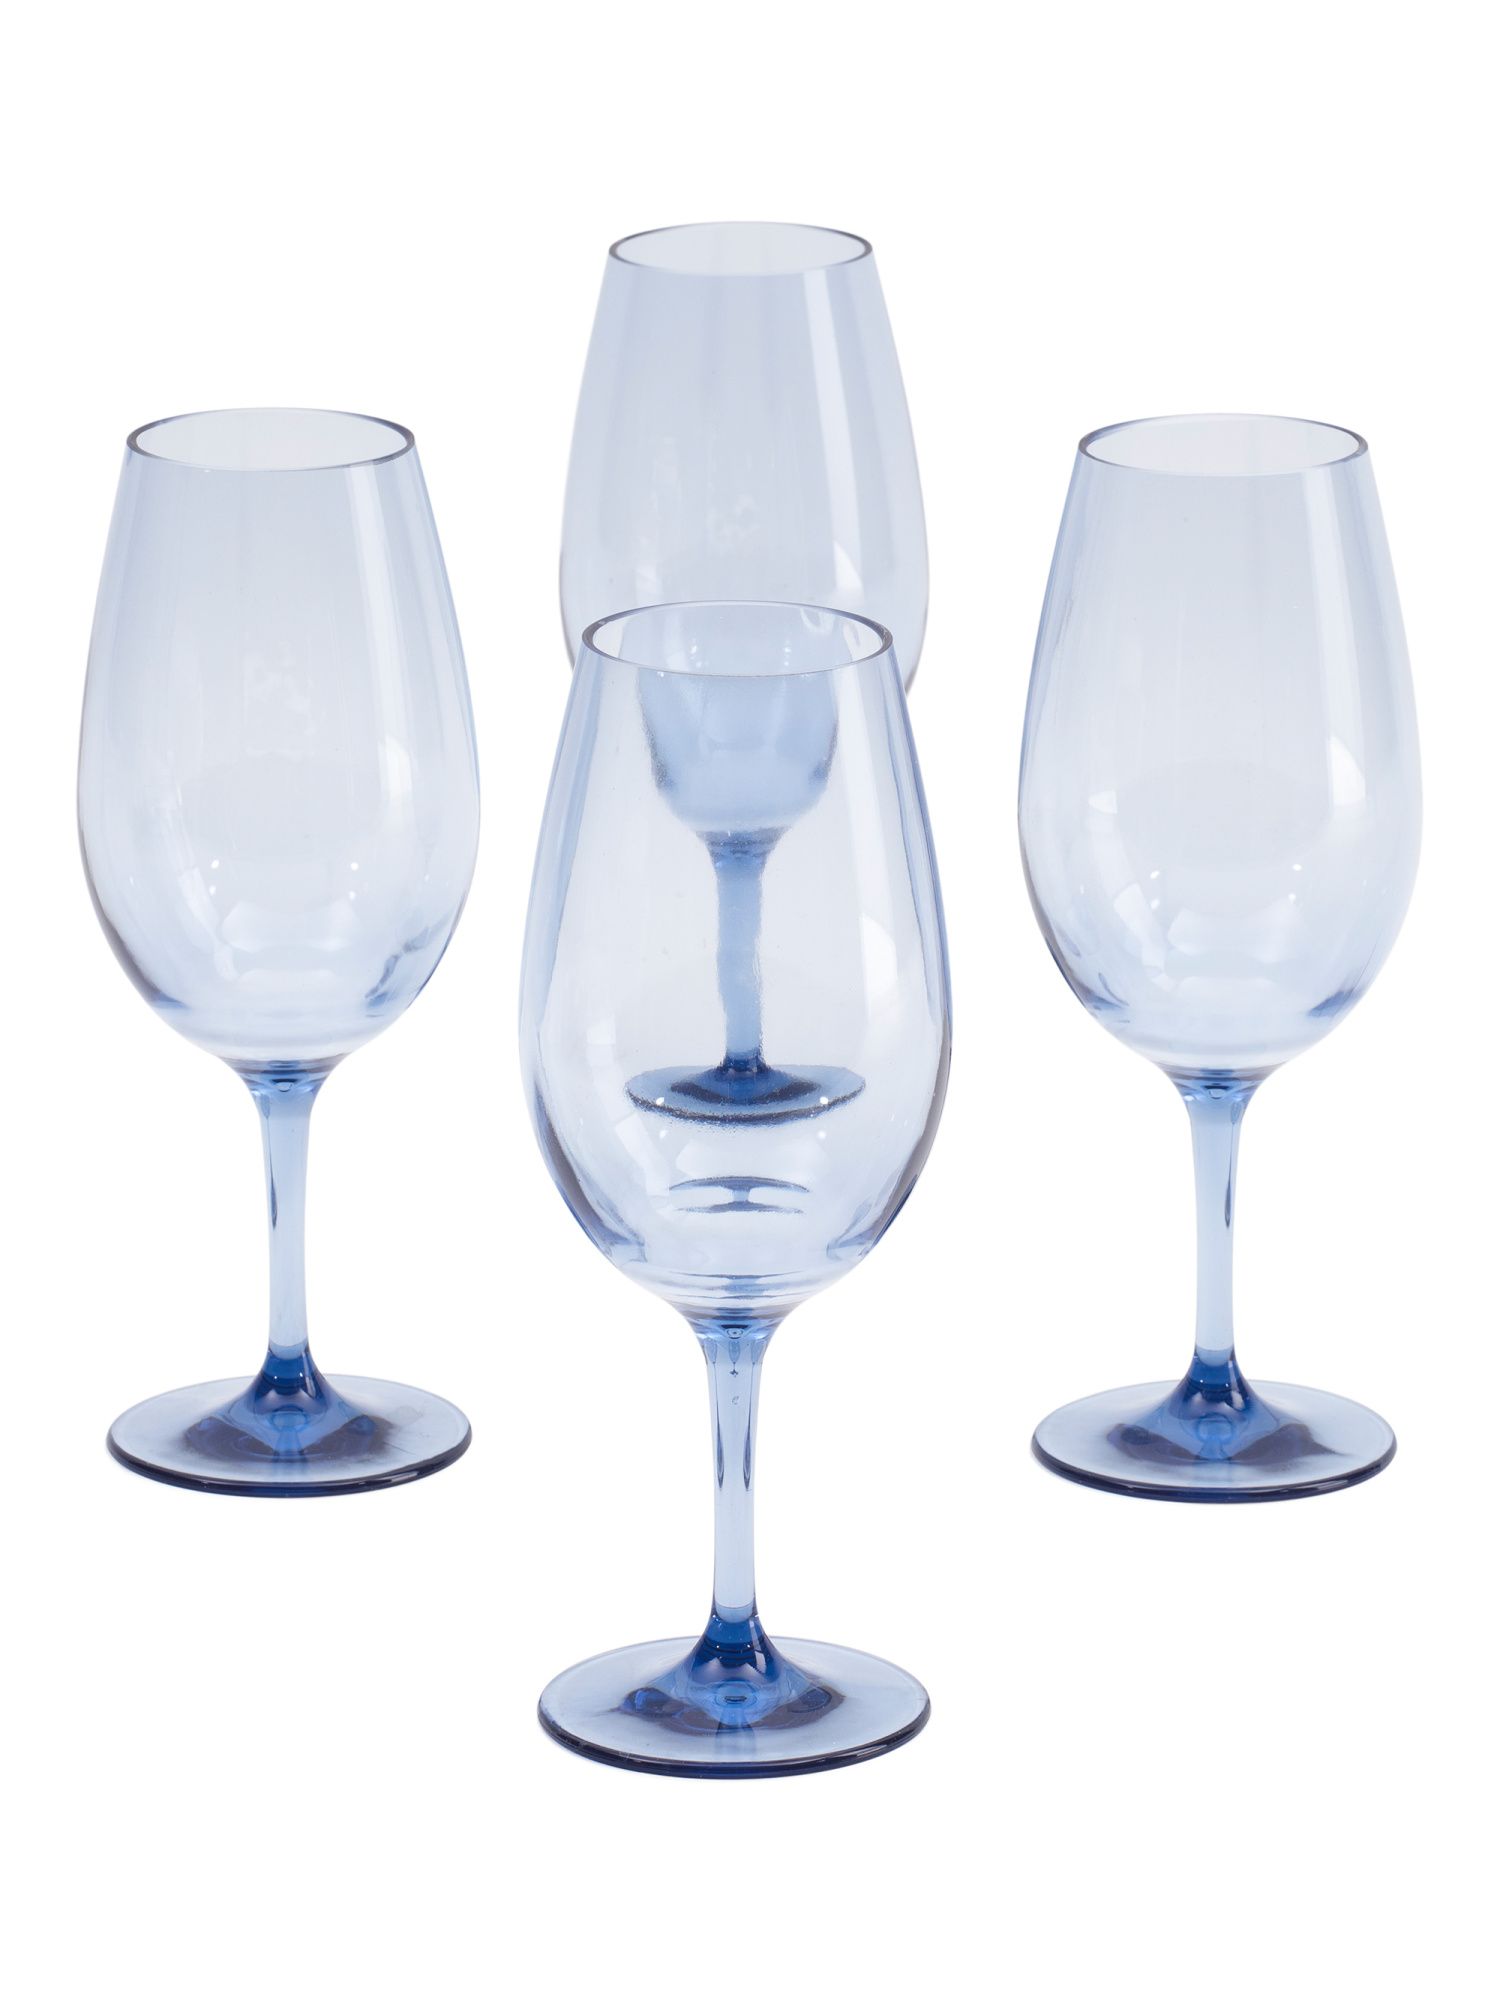 4pk Outdoor Acrylic Wine Glasses | TJ Maxx